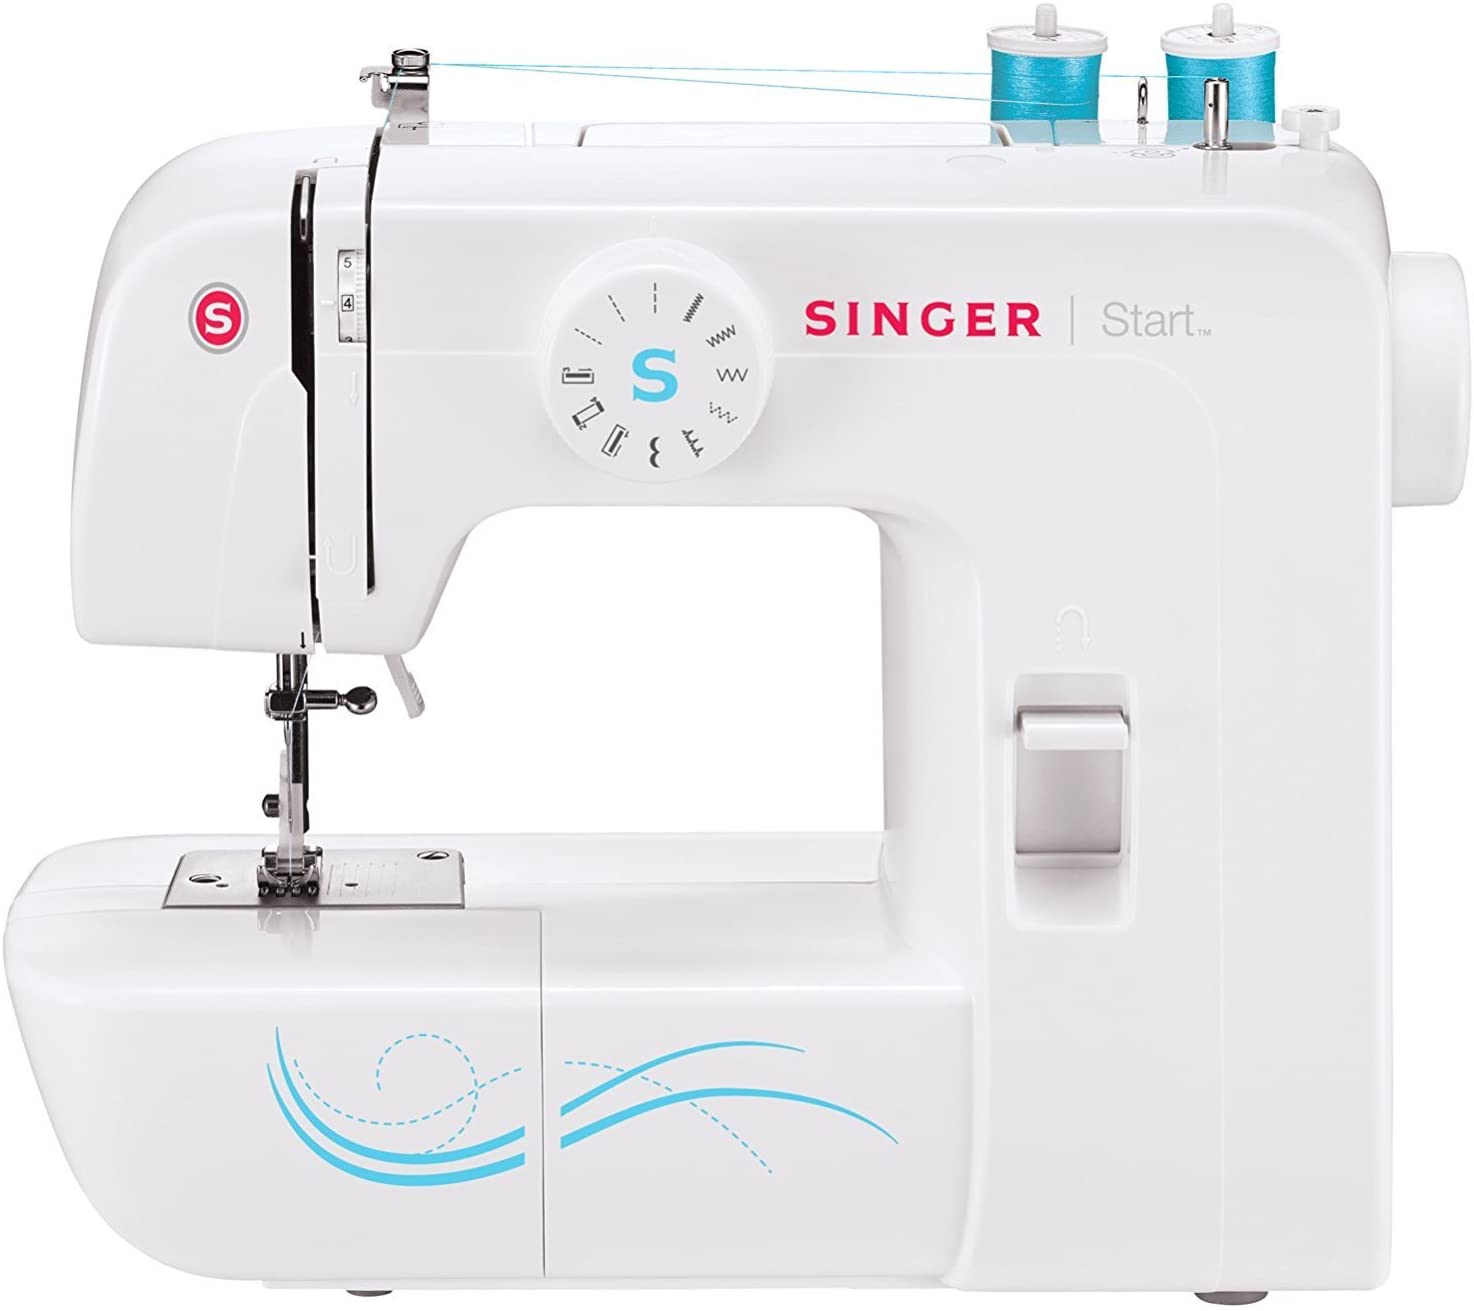 singer starts 1304 mini sewing machine isolated on white background